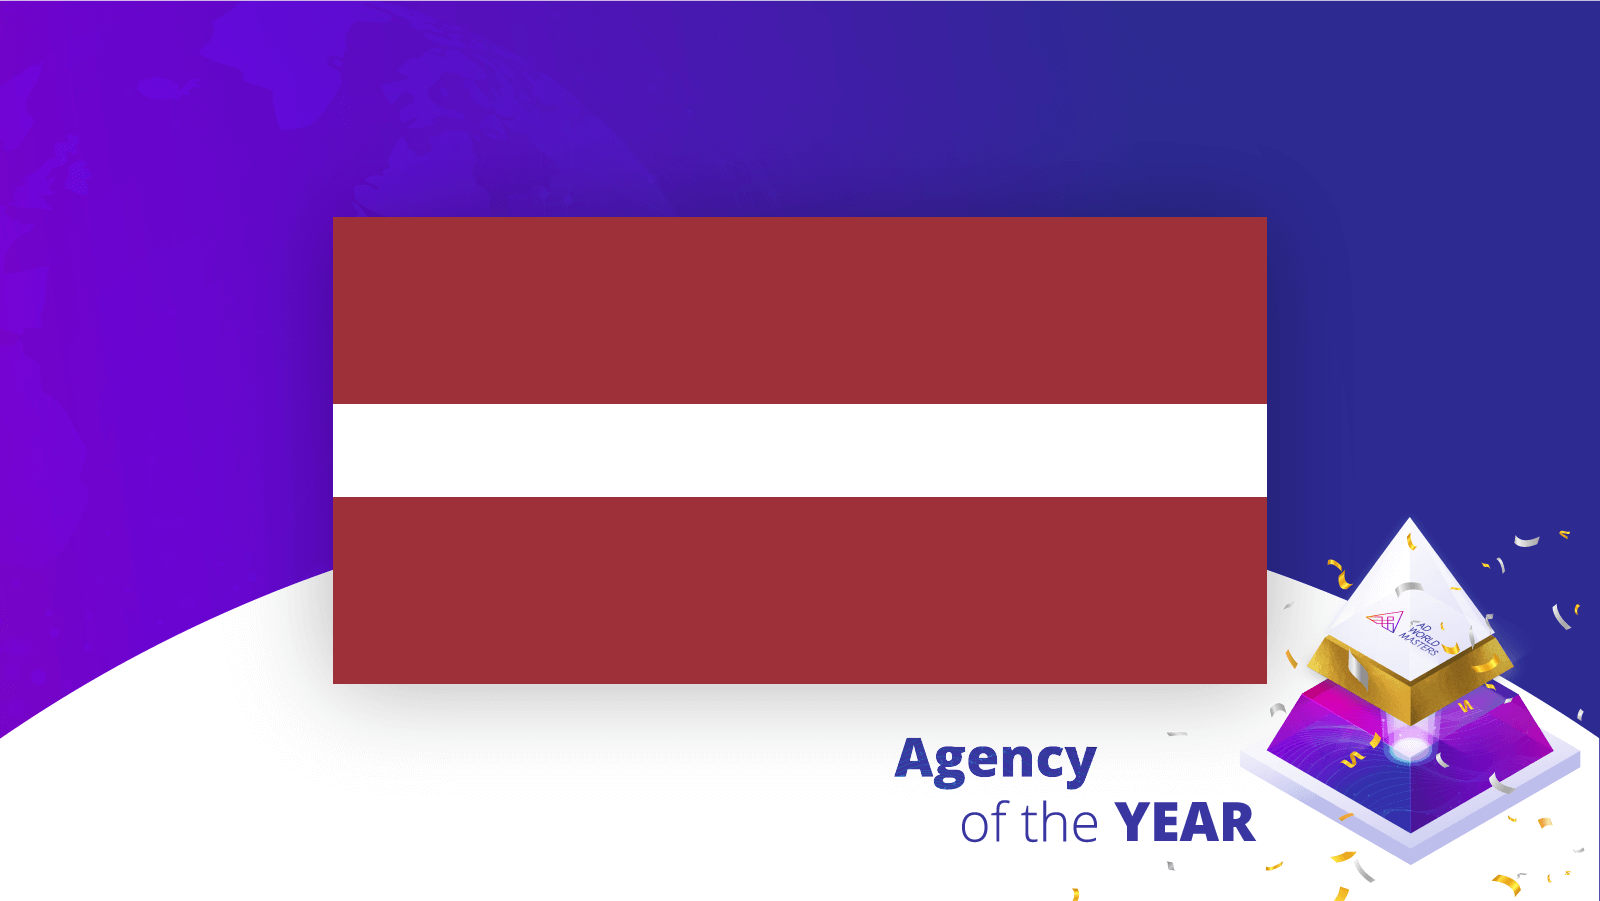 Agencies of the Year Latvia